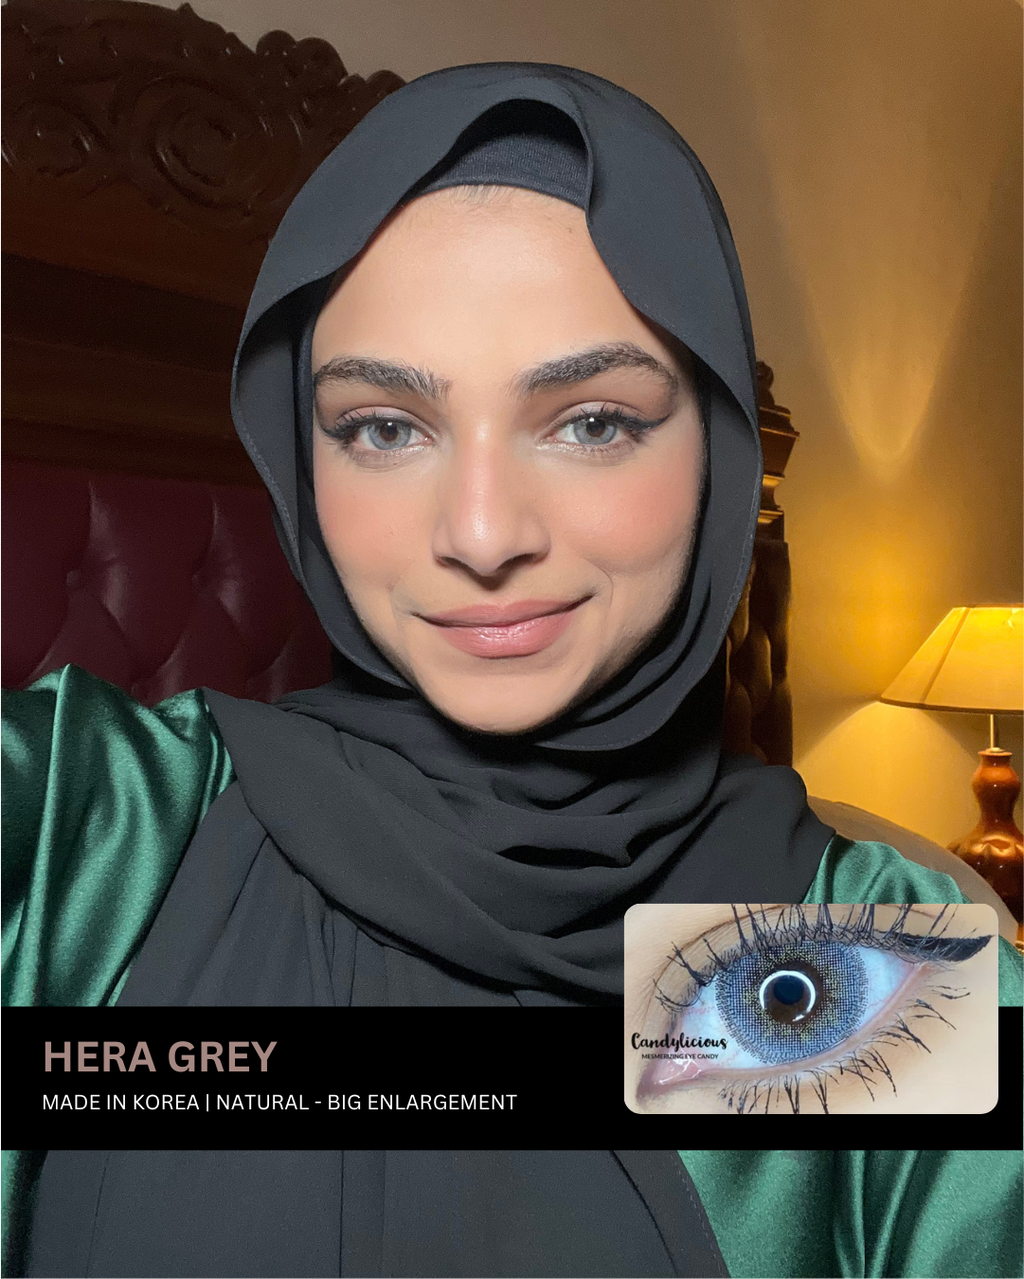 Hera grey